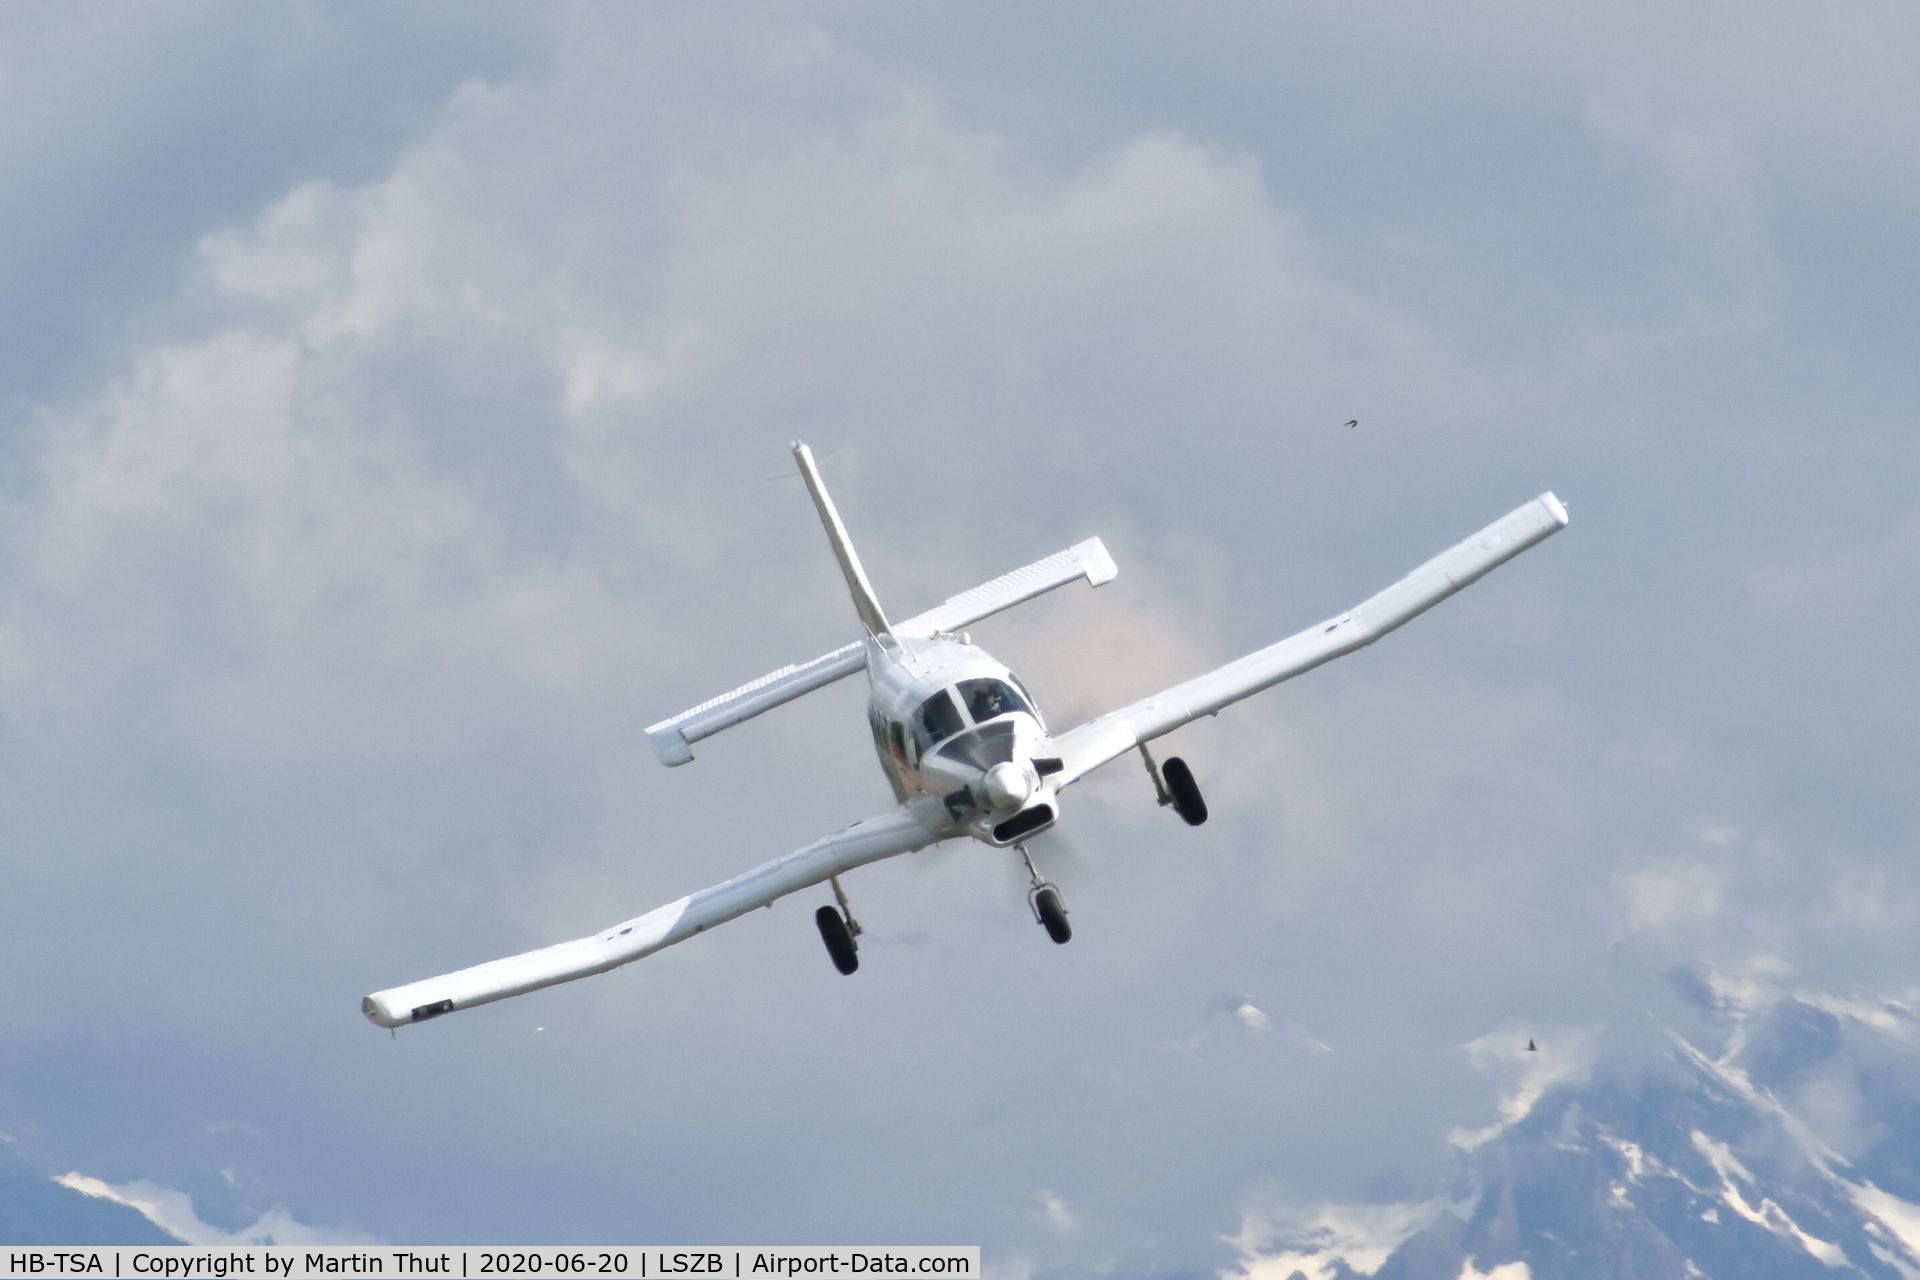 HB-TSA, 2009 Pacific Aerospace 750XL C/N 152, Bring skydivers into the sky and landing